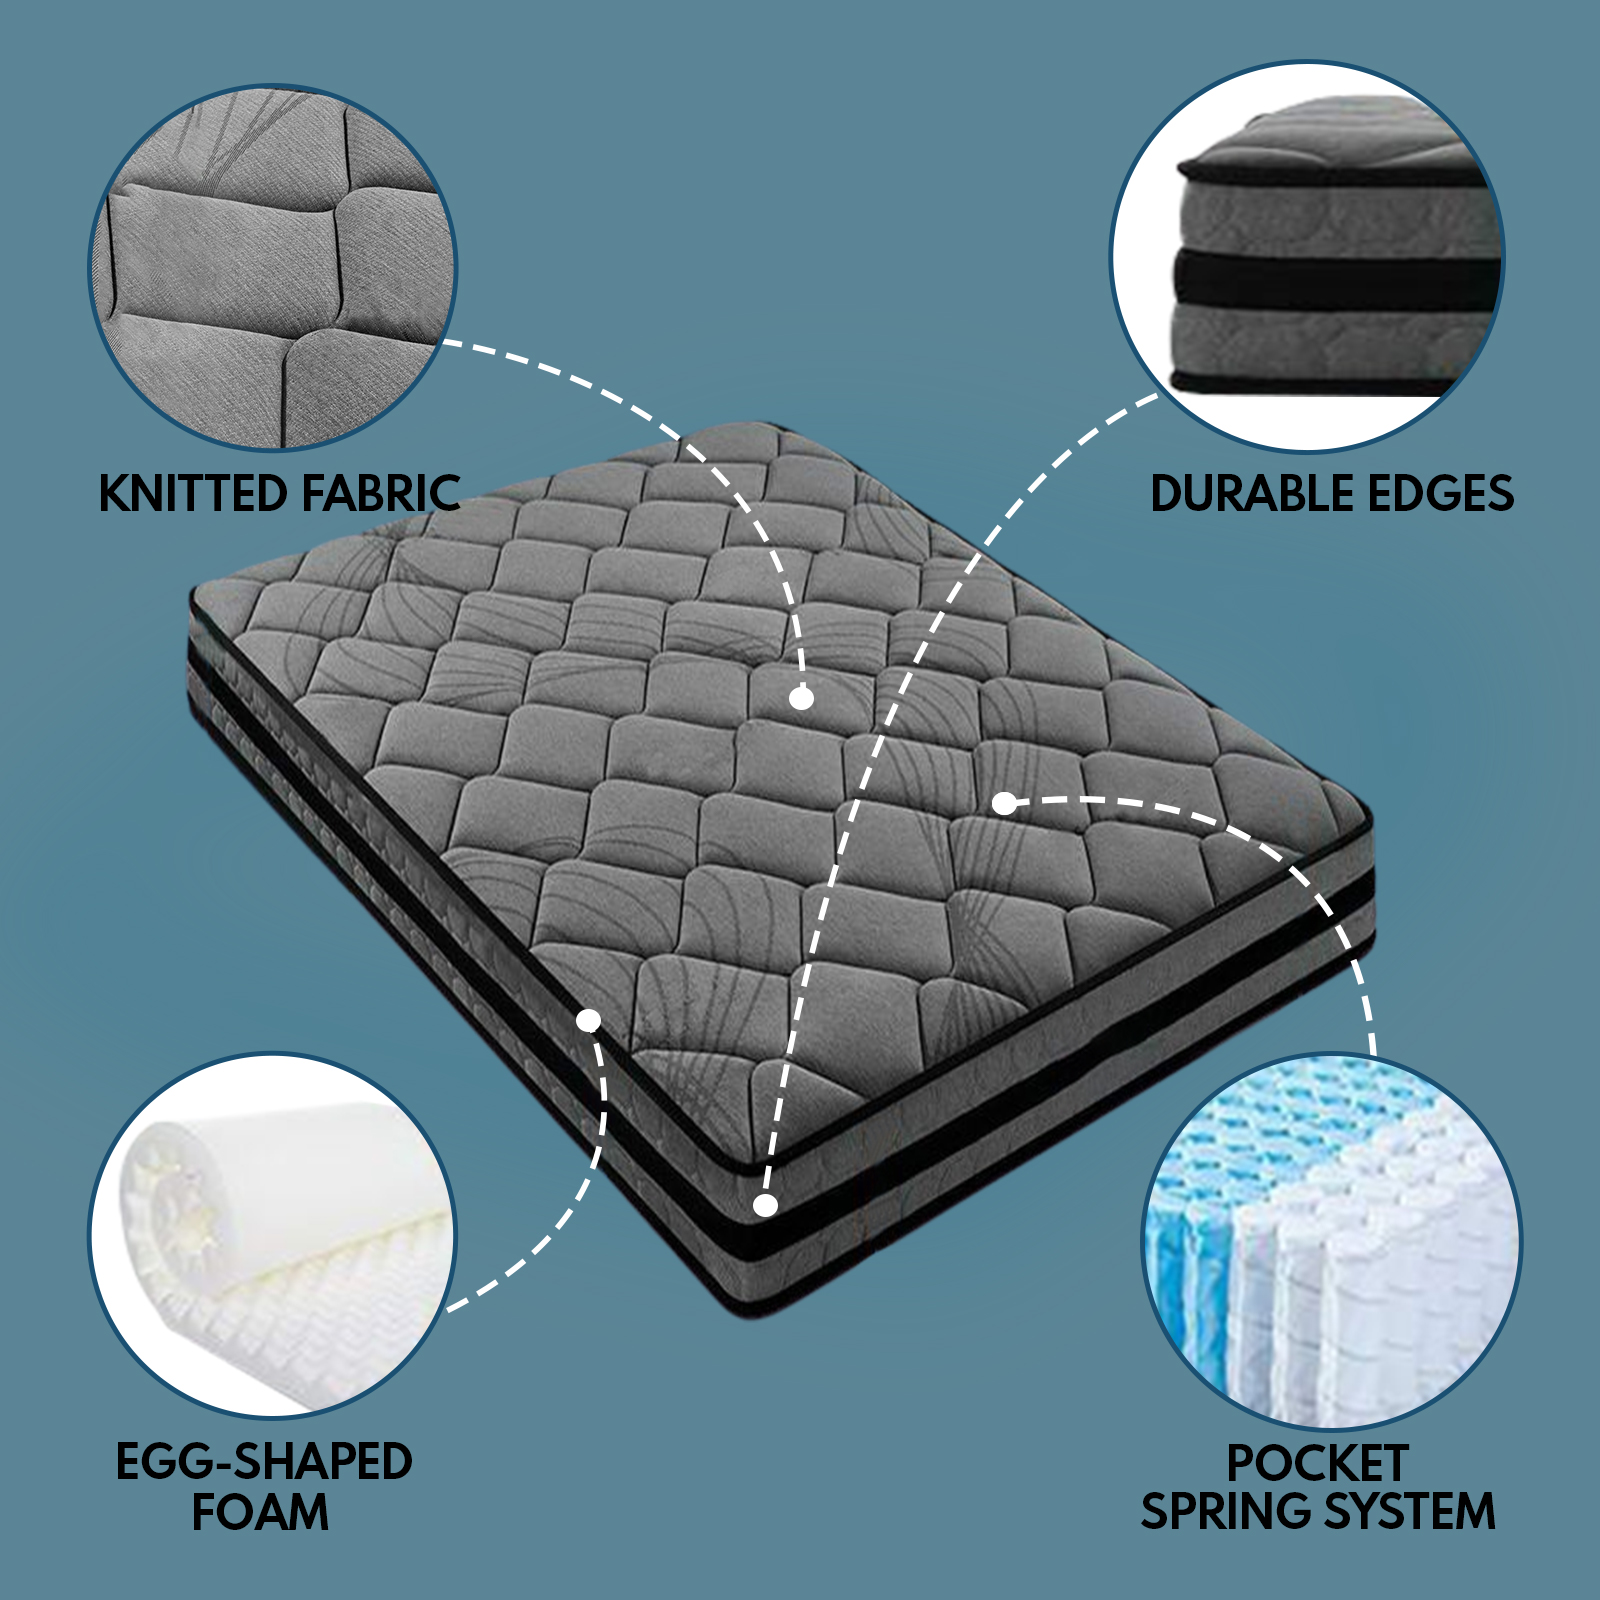 Single Size Mattress Bed Medium Firm Foam 5 Zone Pocket Spring 22cm Grey